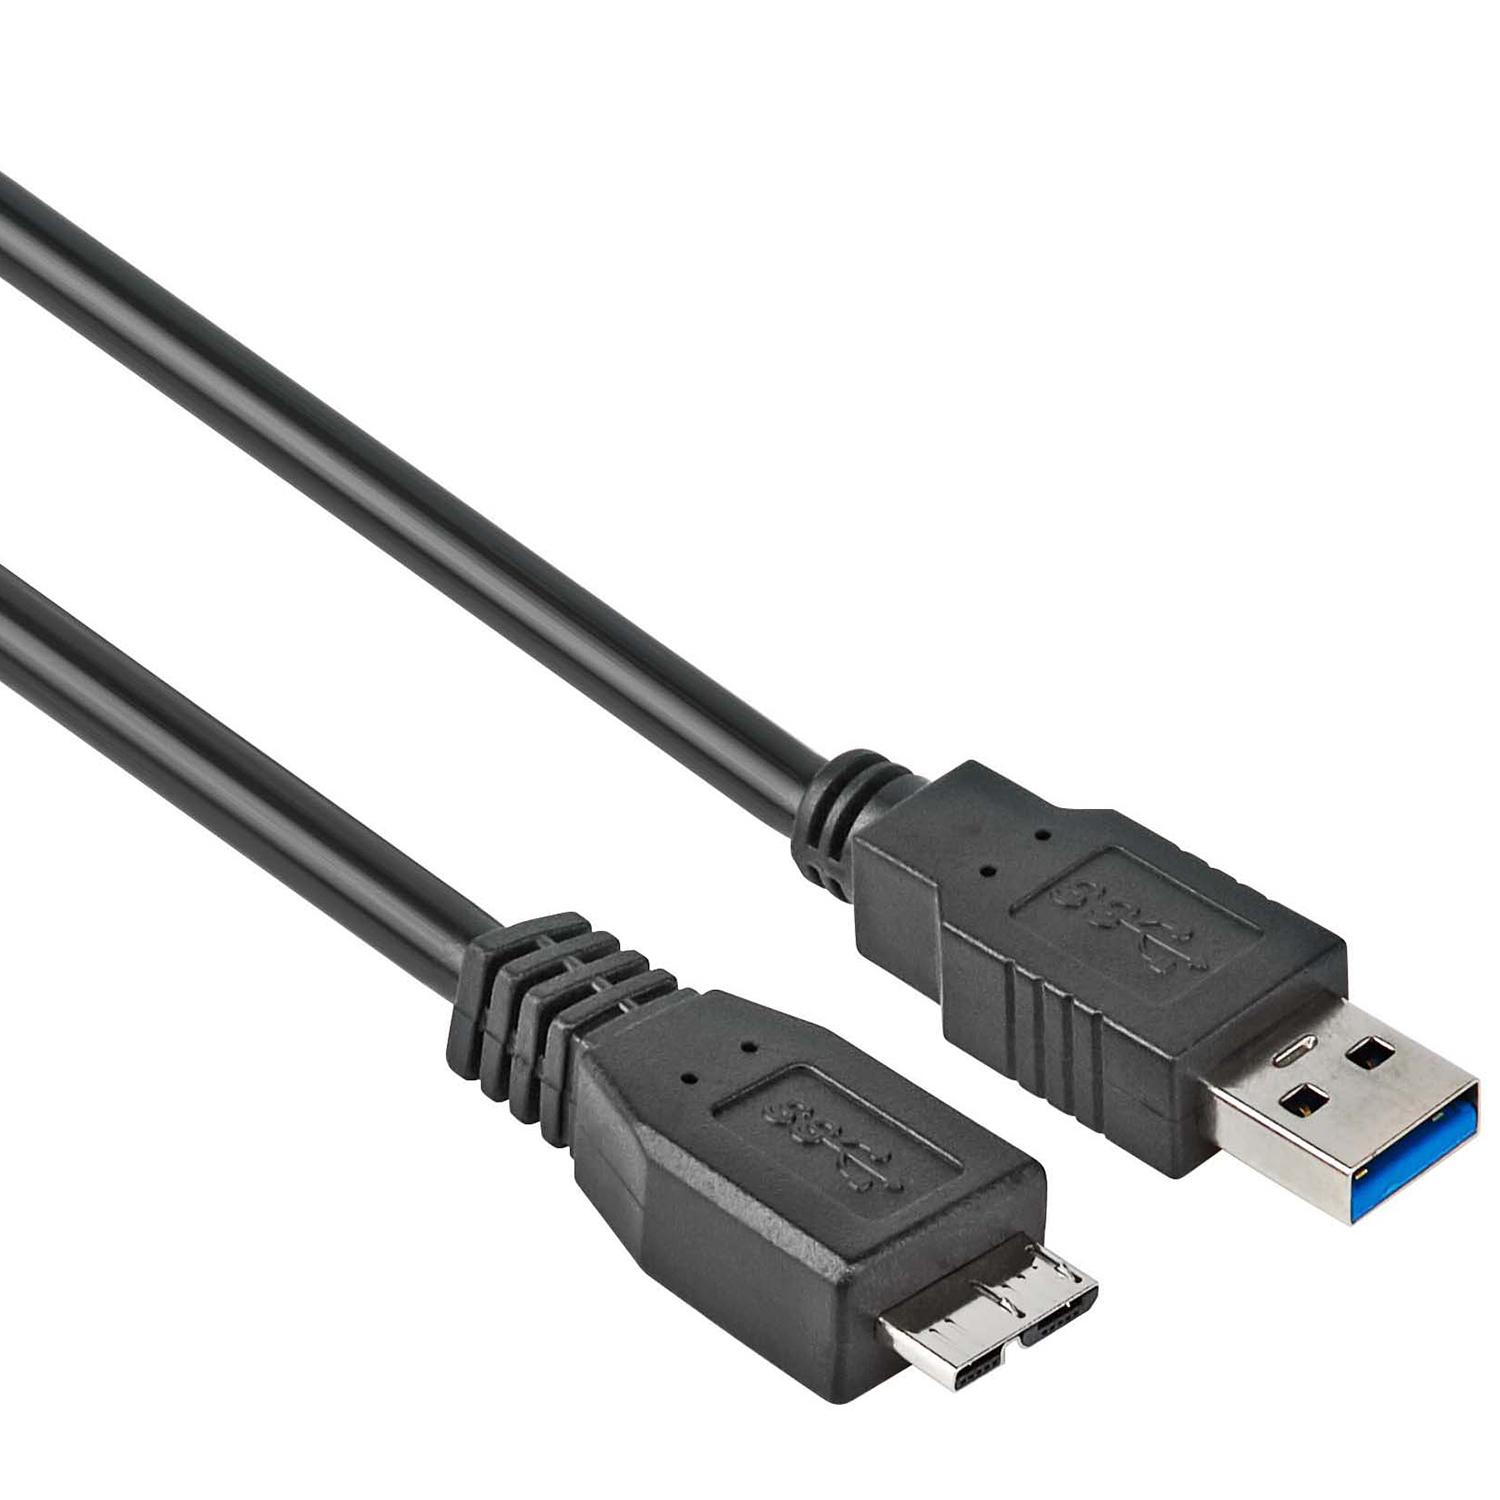 USB 3.0 naar Micro 3.0 Kabel - Versie: 3.0 - SuperSpeed, Aansluiting Micro B male, Aansluiting USB A male, Lengte: 5 meter.